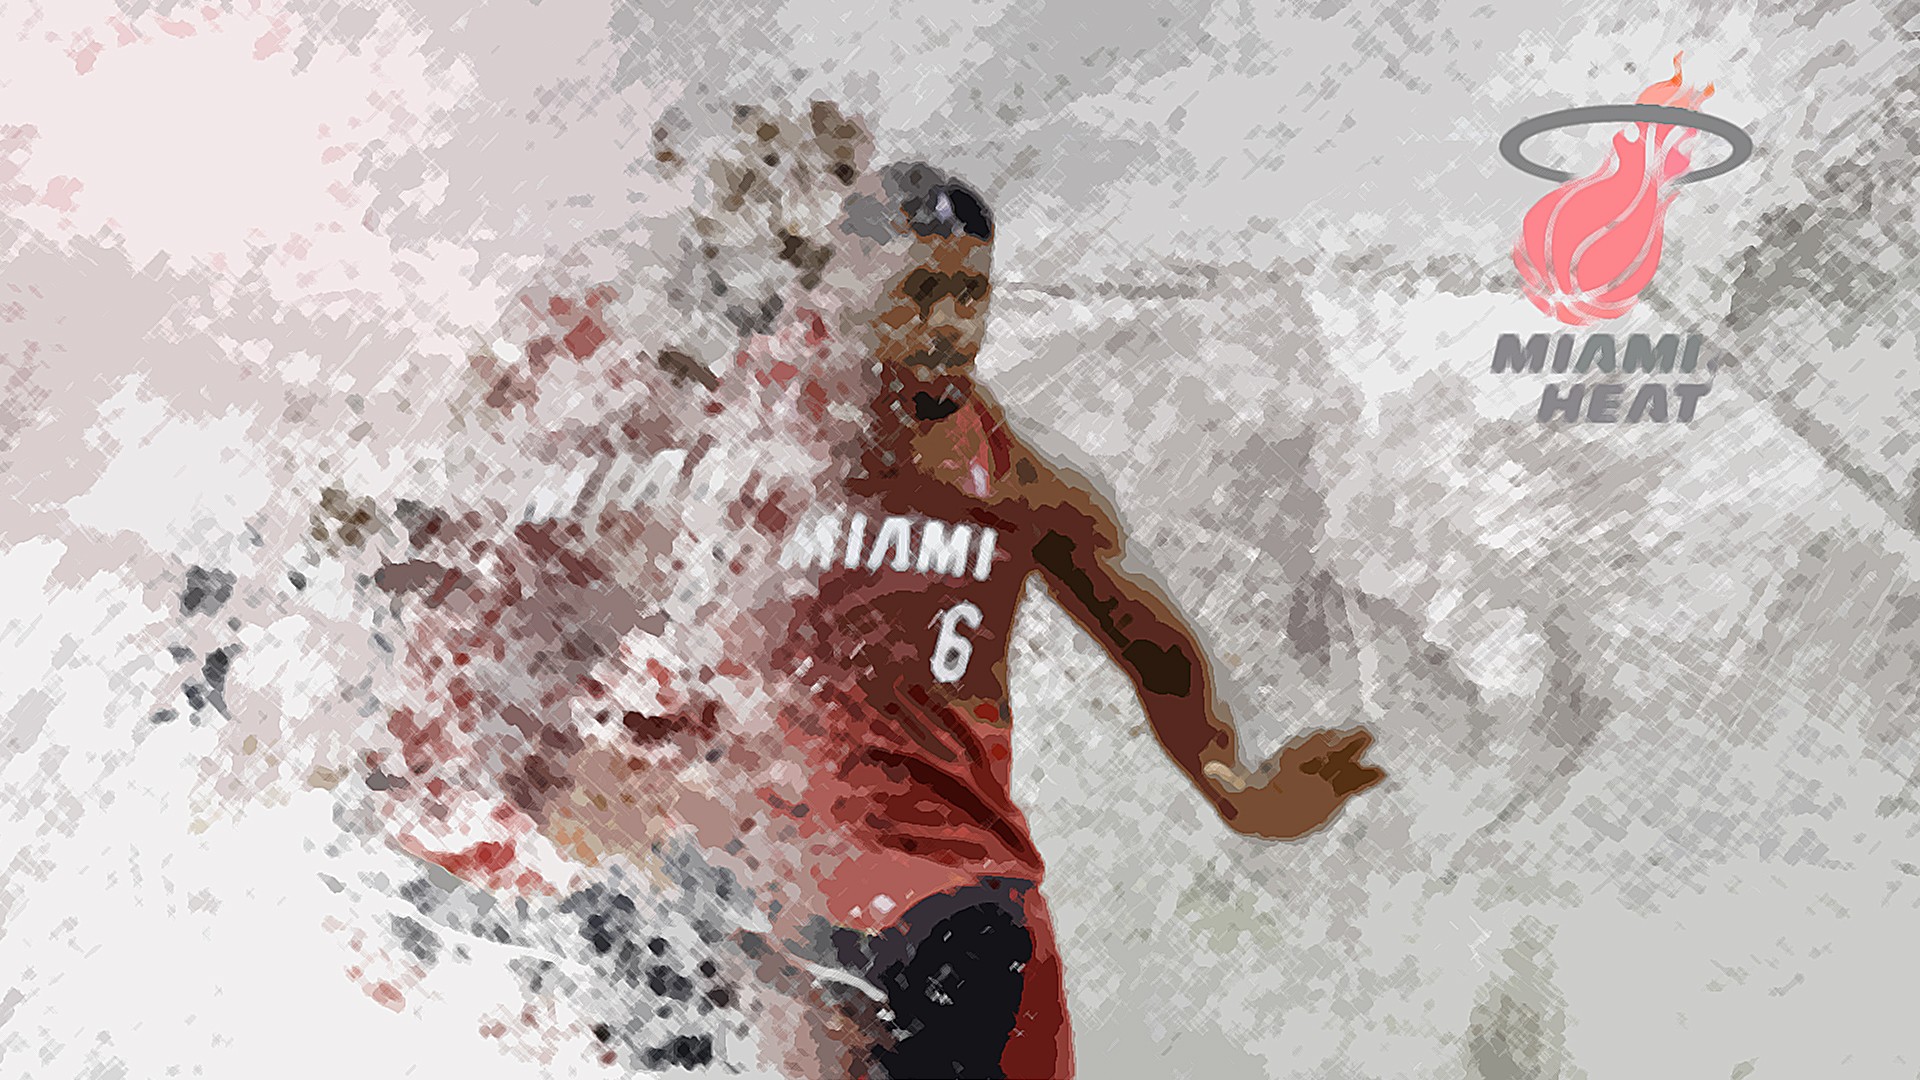 Descarga gratuita de fondo de pantalla para móvil de Baloncesto, Nba, Deporte, Miami Heat, Lebron James.